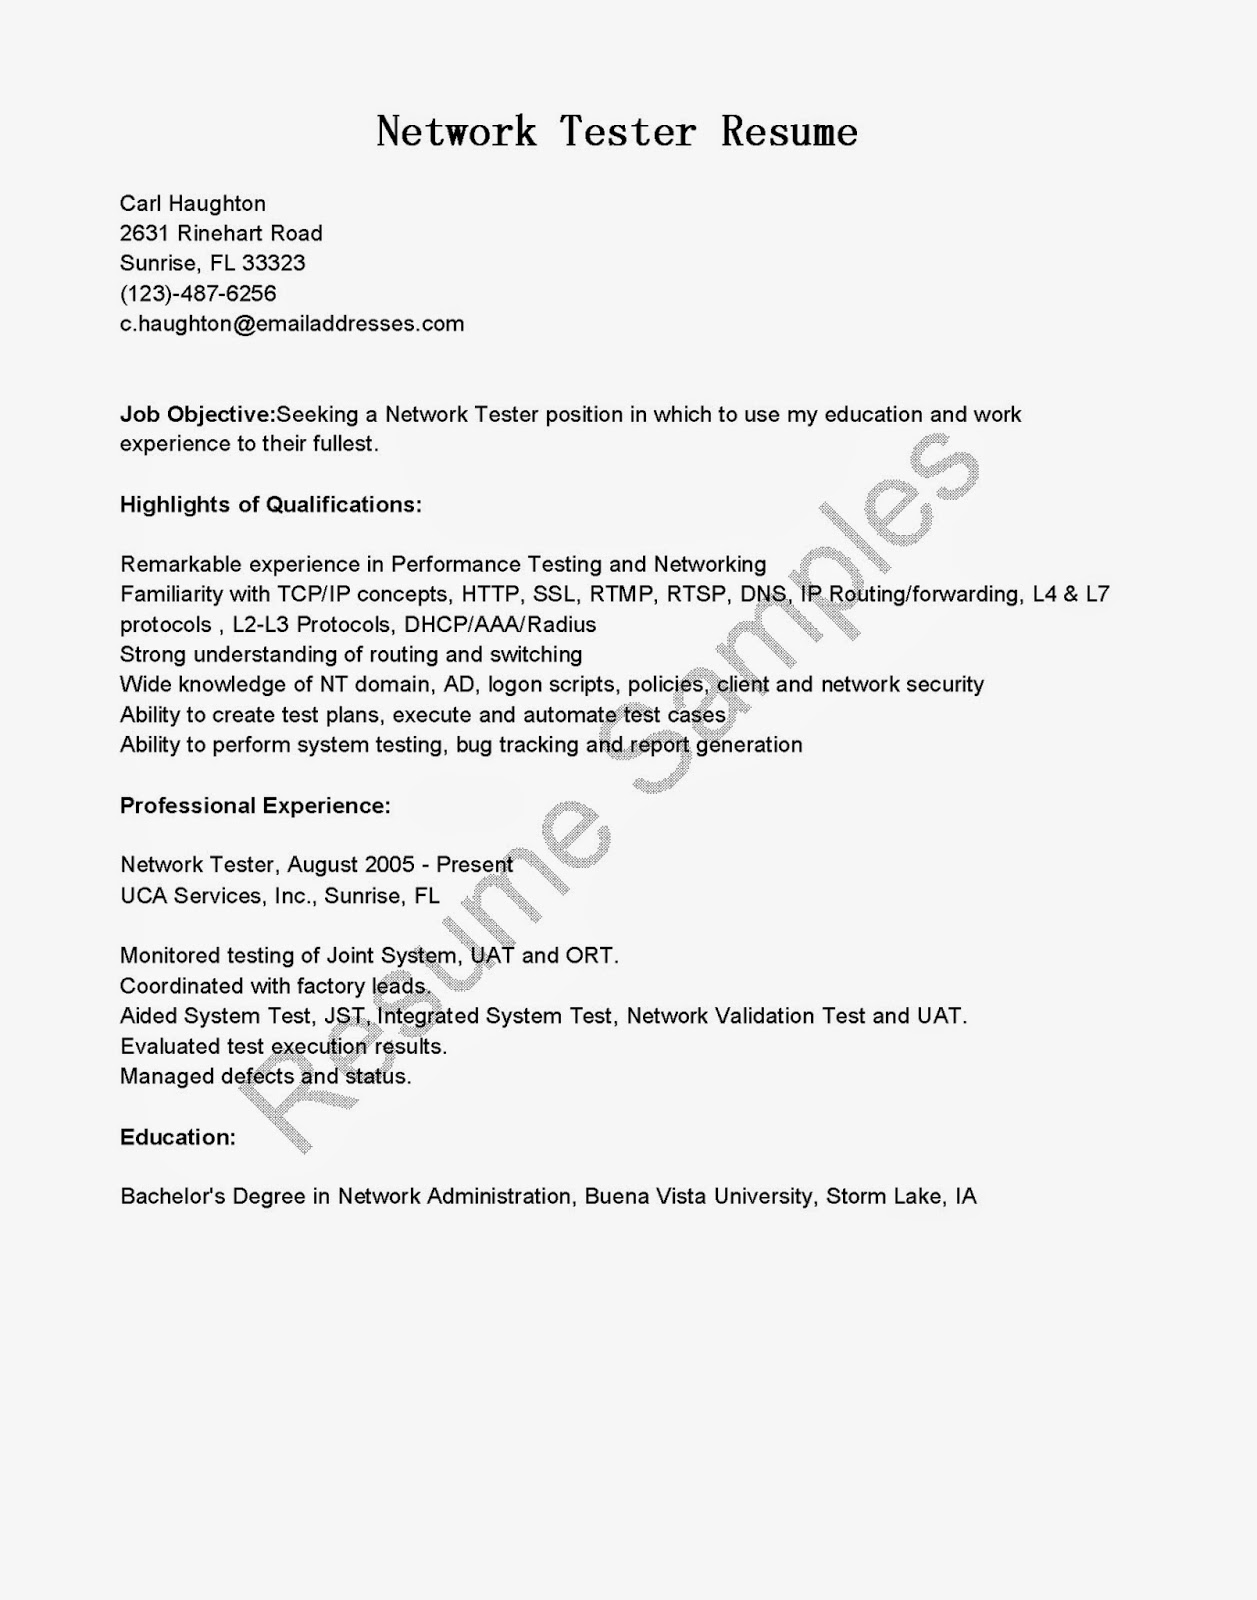 Cisco voip technician resume